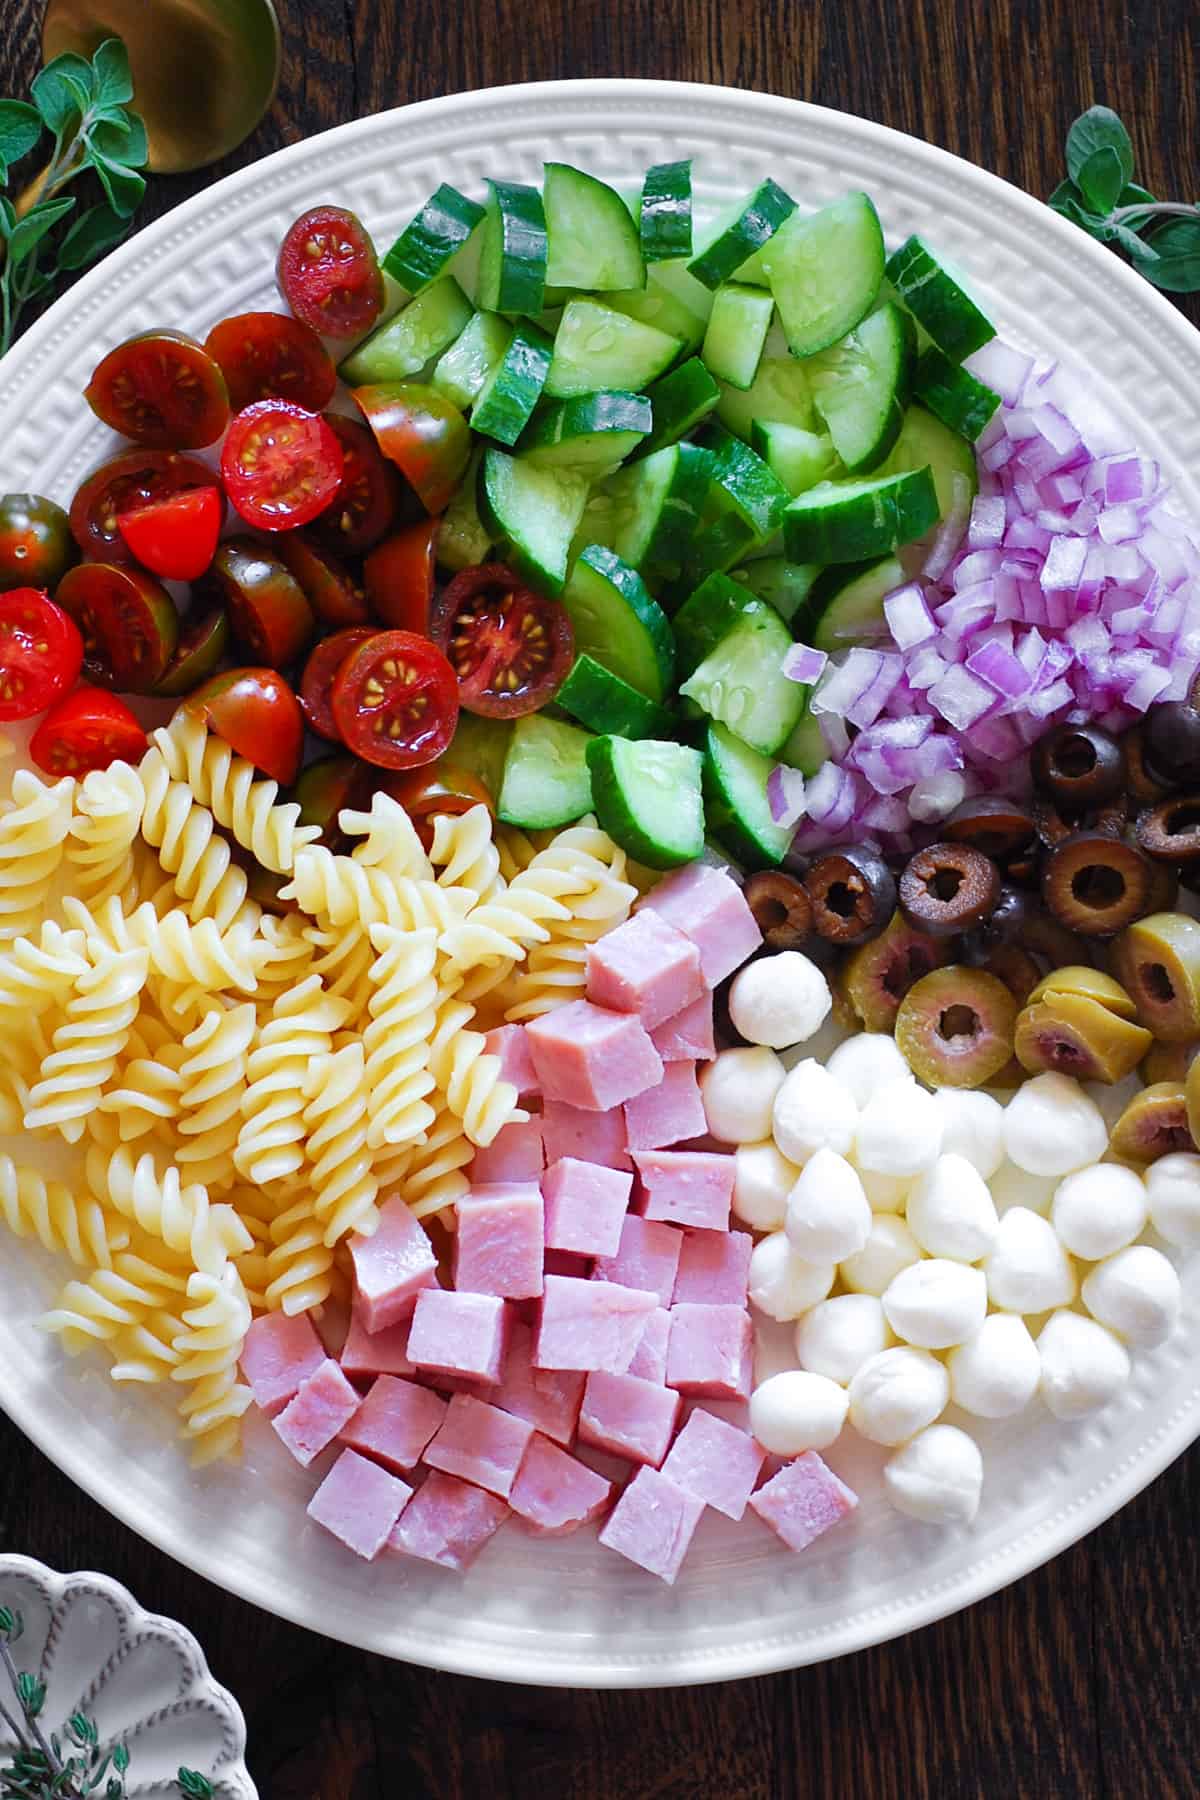 ham pasta salad ingredients on a white plate.